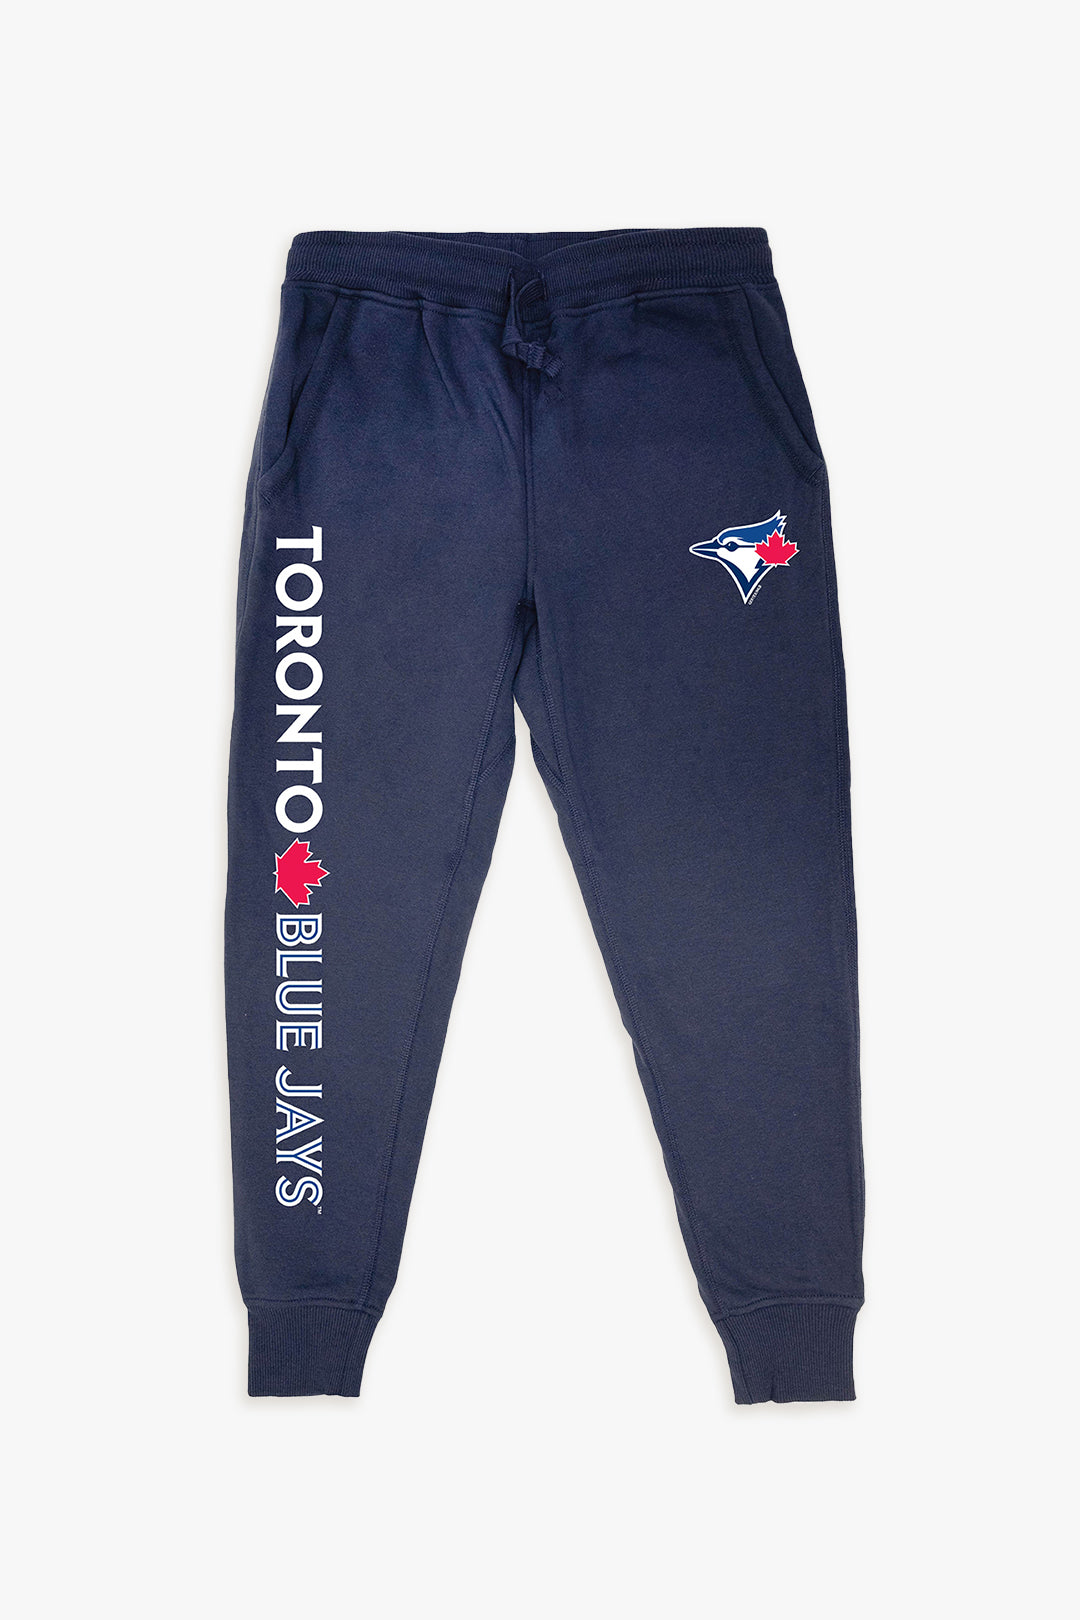 Gertex MLB Toronto Blue Jays Navy Kids Lounge Pants